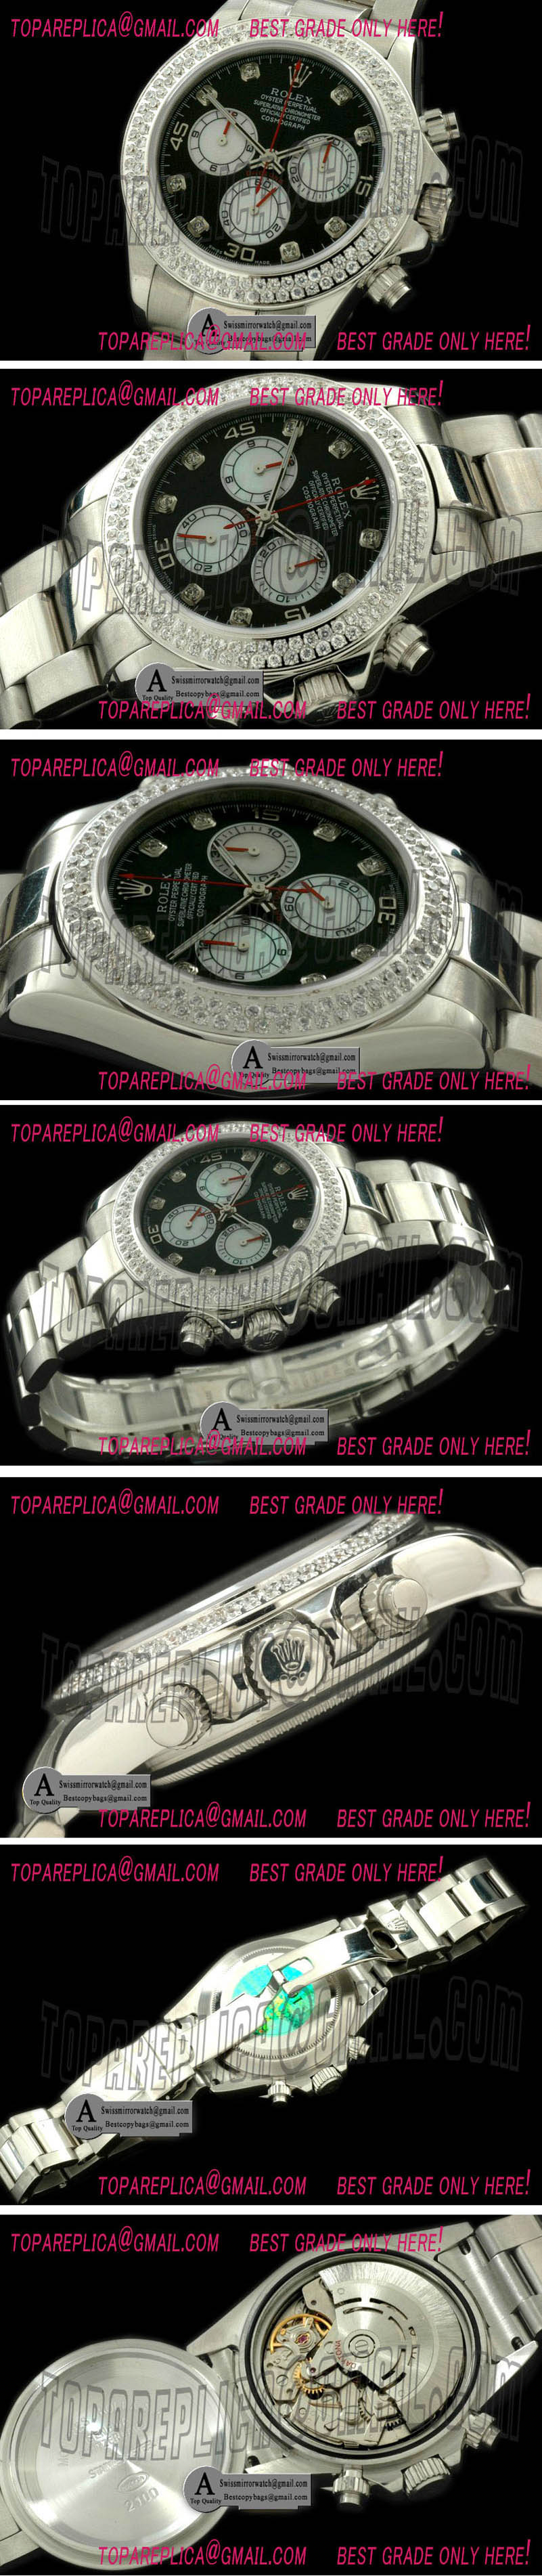 Rolex Daytona 2011 SS Diamond SS Black White Diamond A 7750 Sec@6 28800 Replica Watches